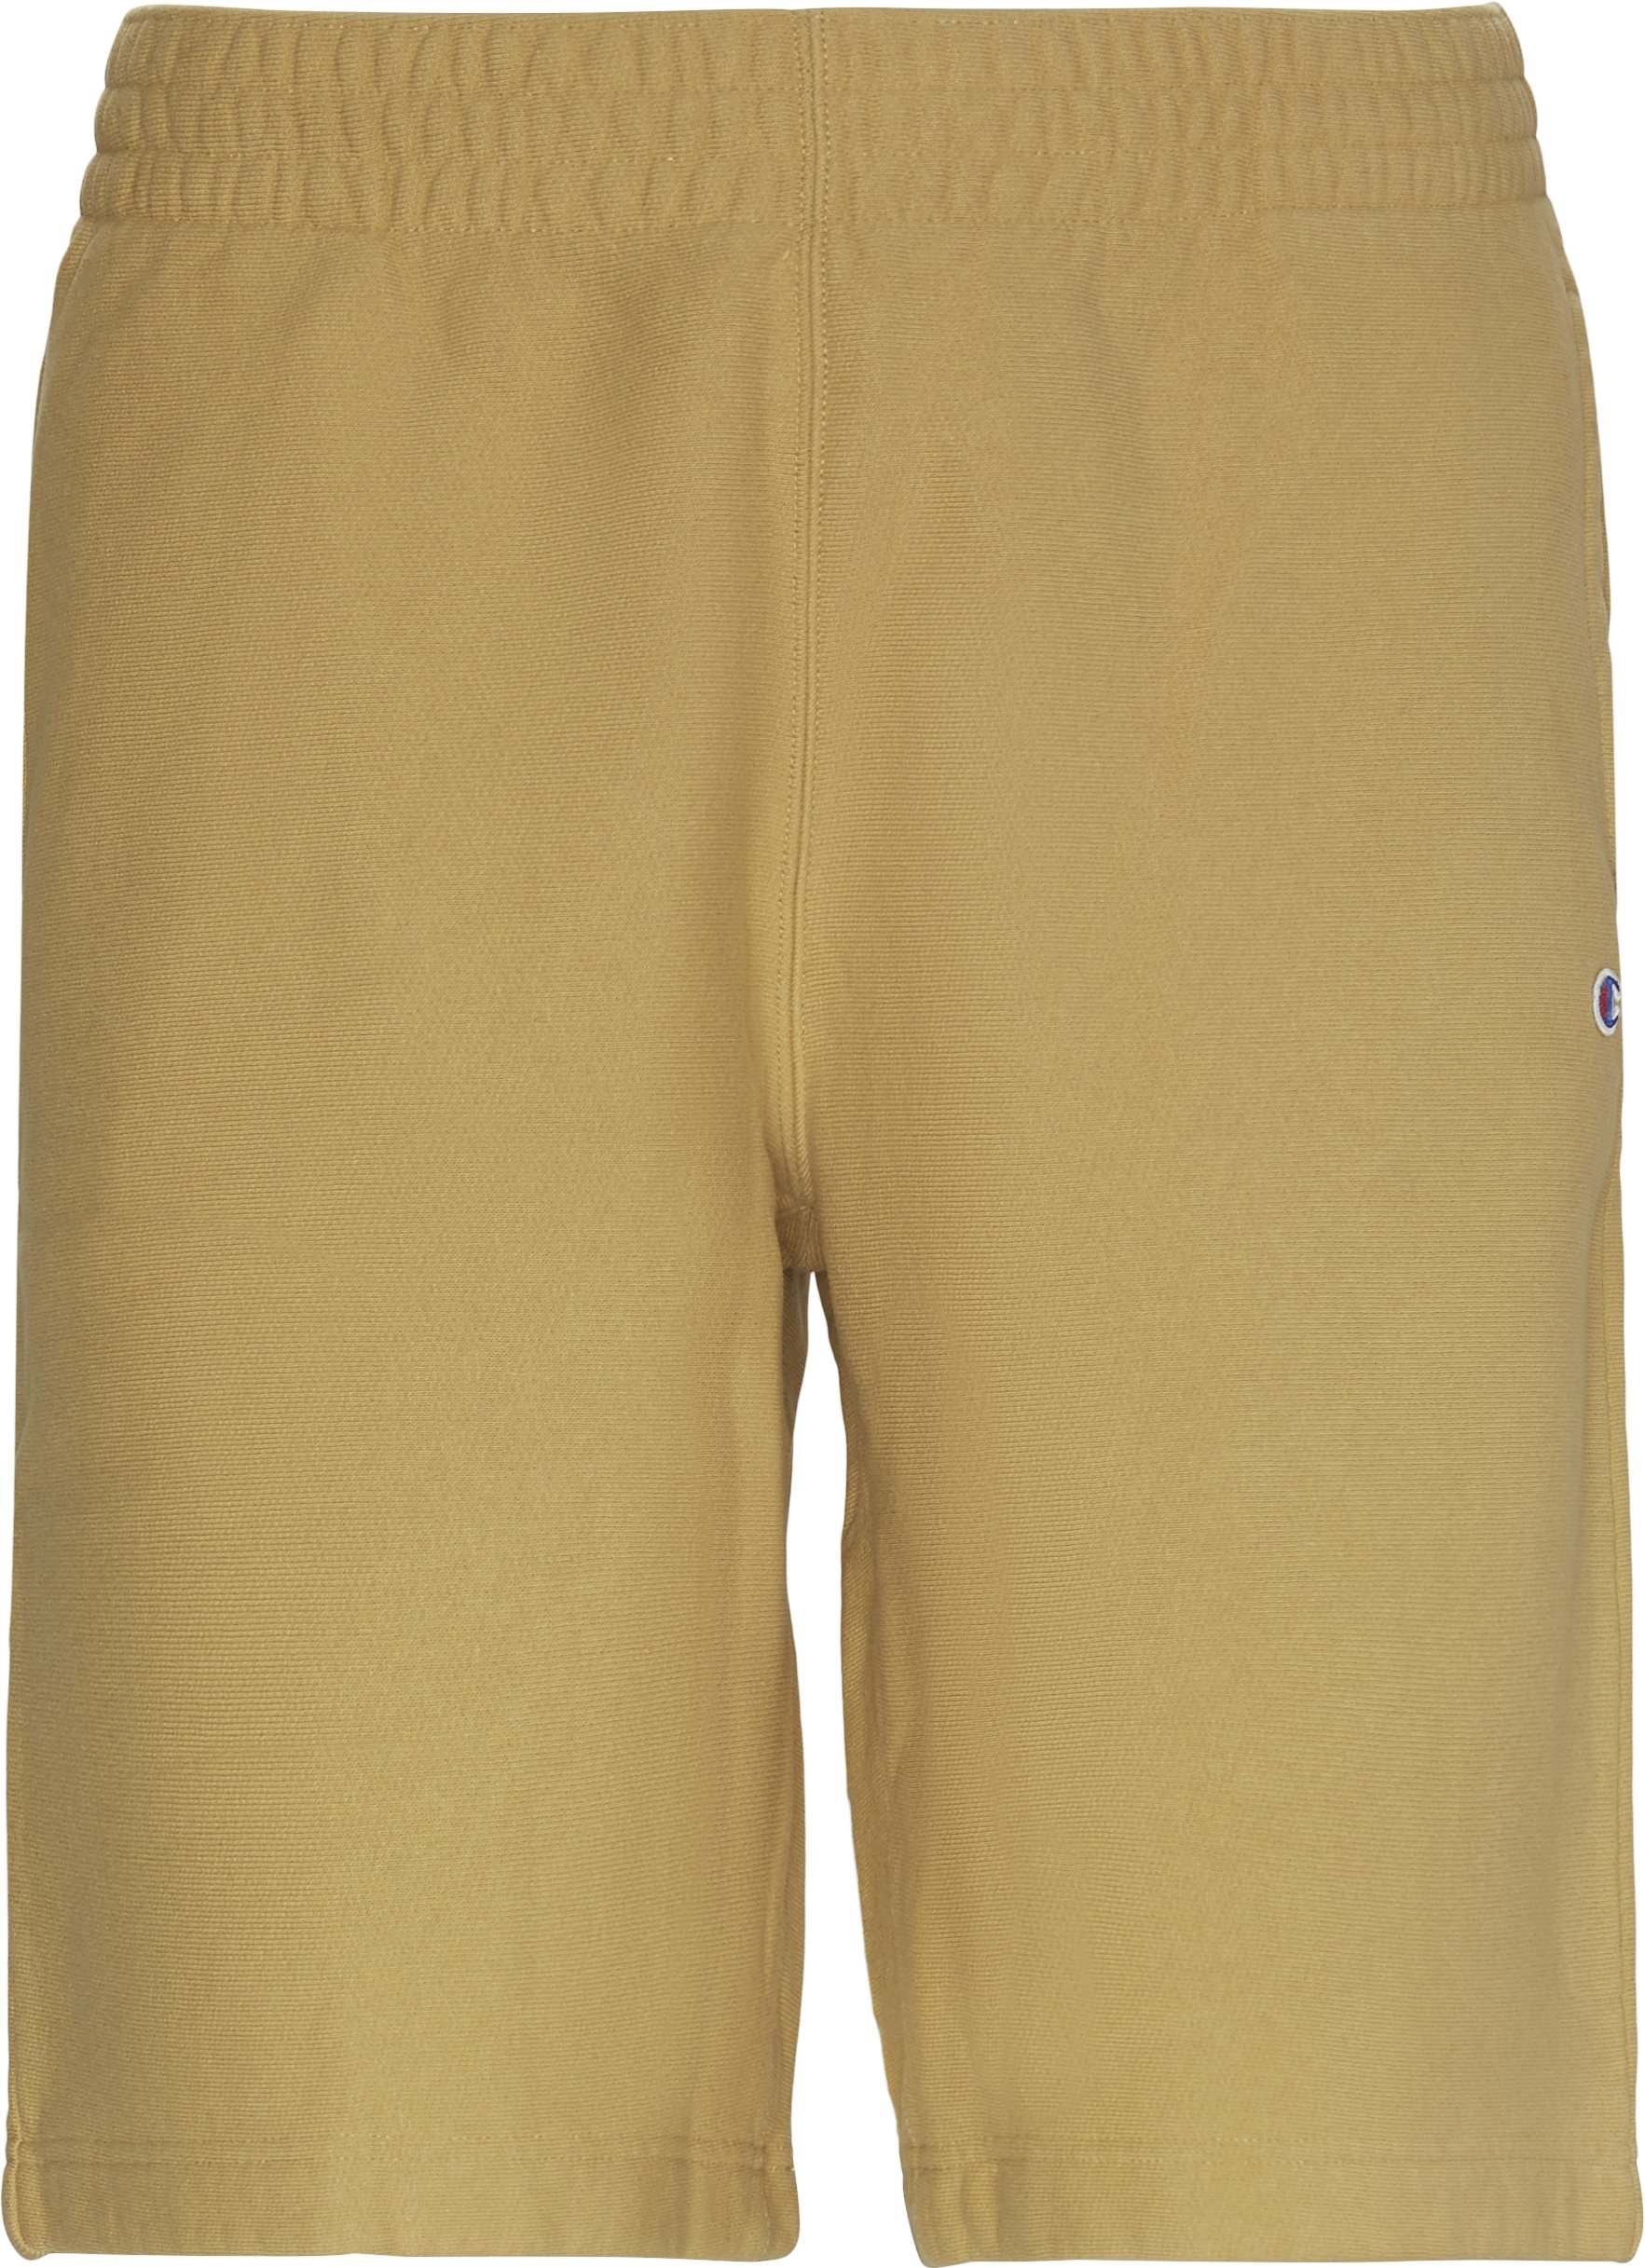 Reverse Weave Shorts - Shorts - Regular fit - Sand